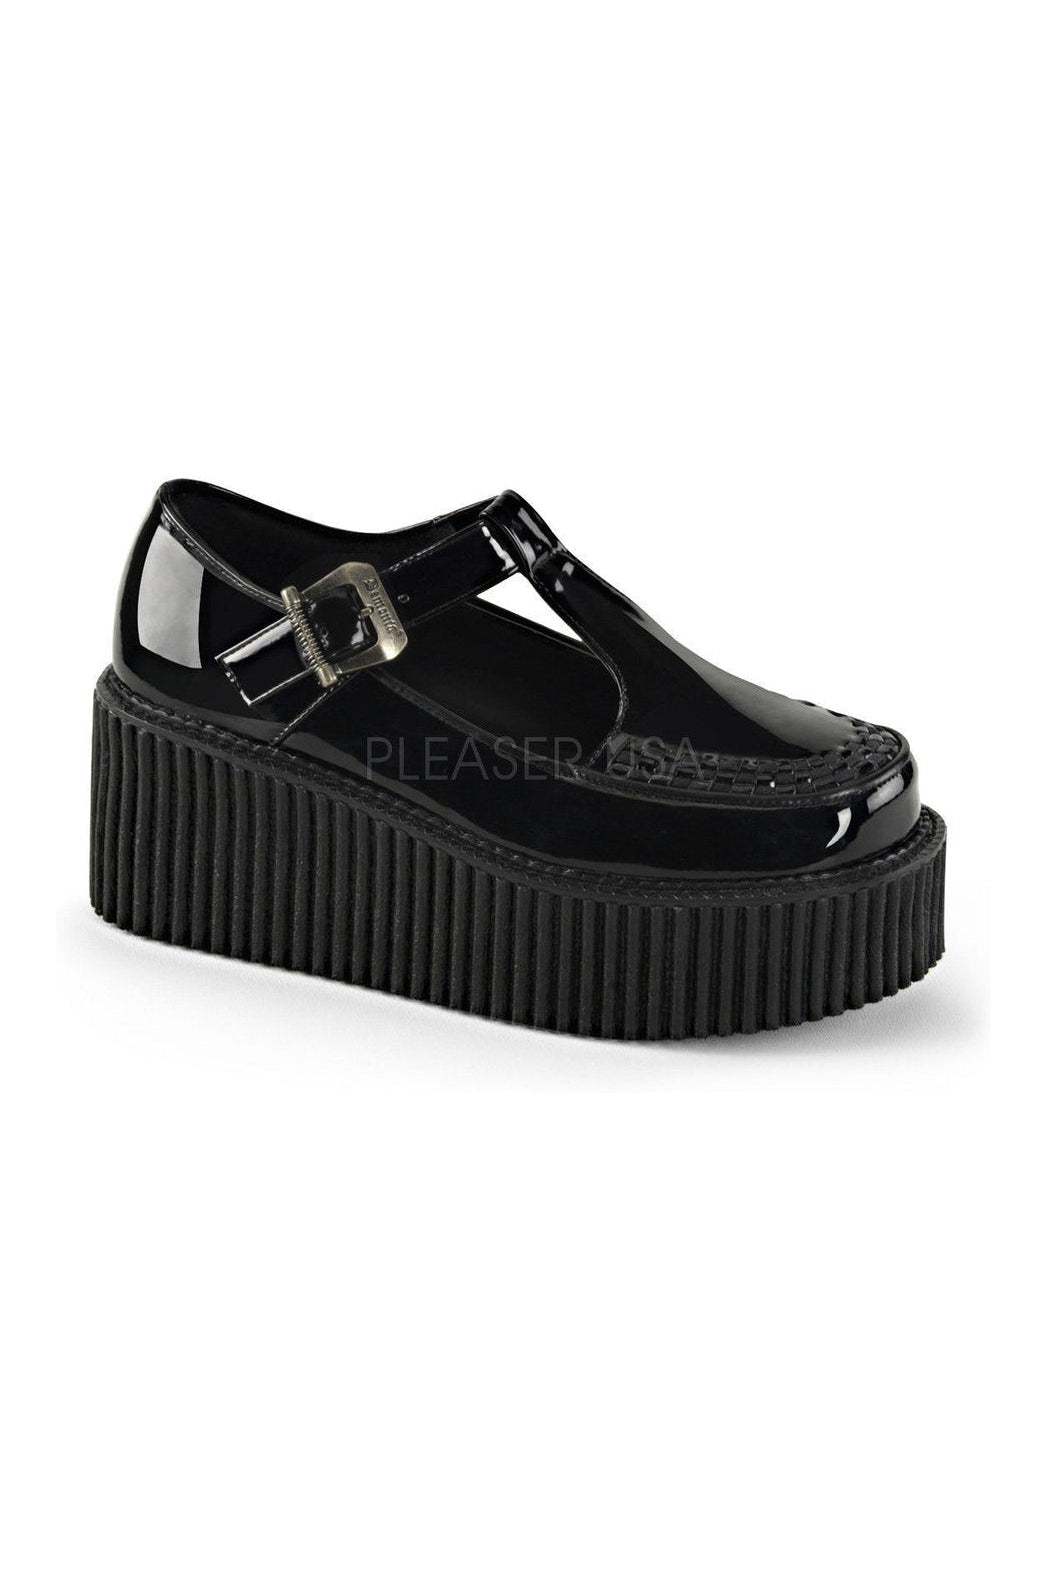 CREEPER-214 Demonia Shoe | Black Patent-Demonia-Black-Creepers-SEXYSHOES.COM